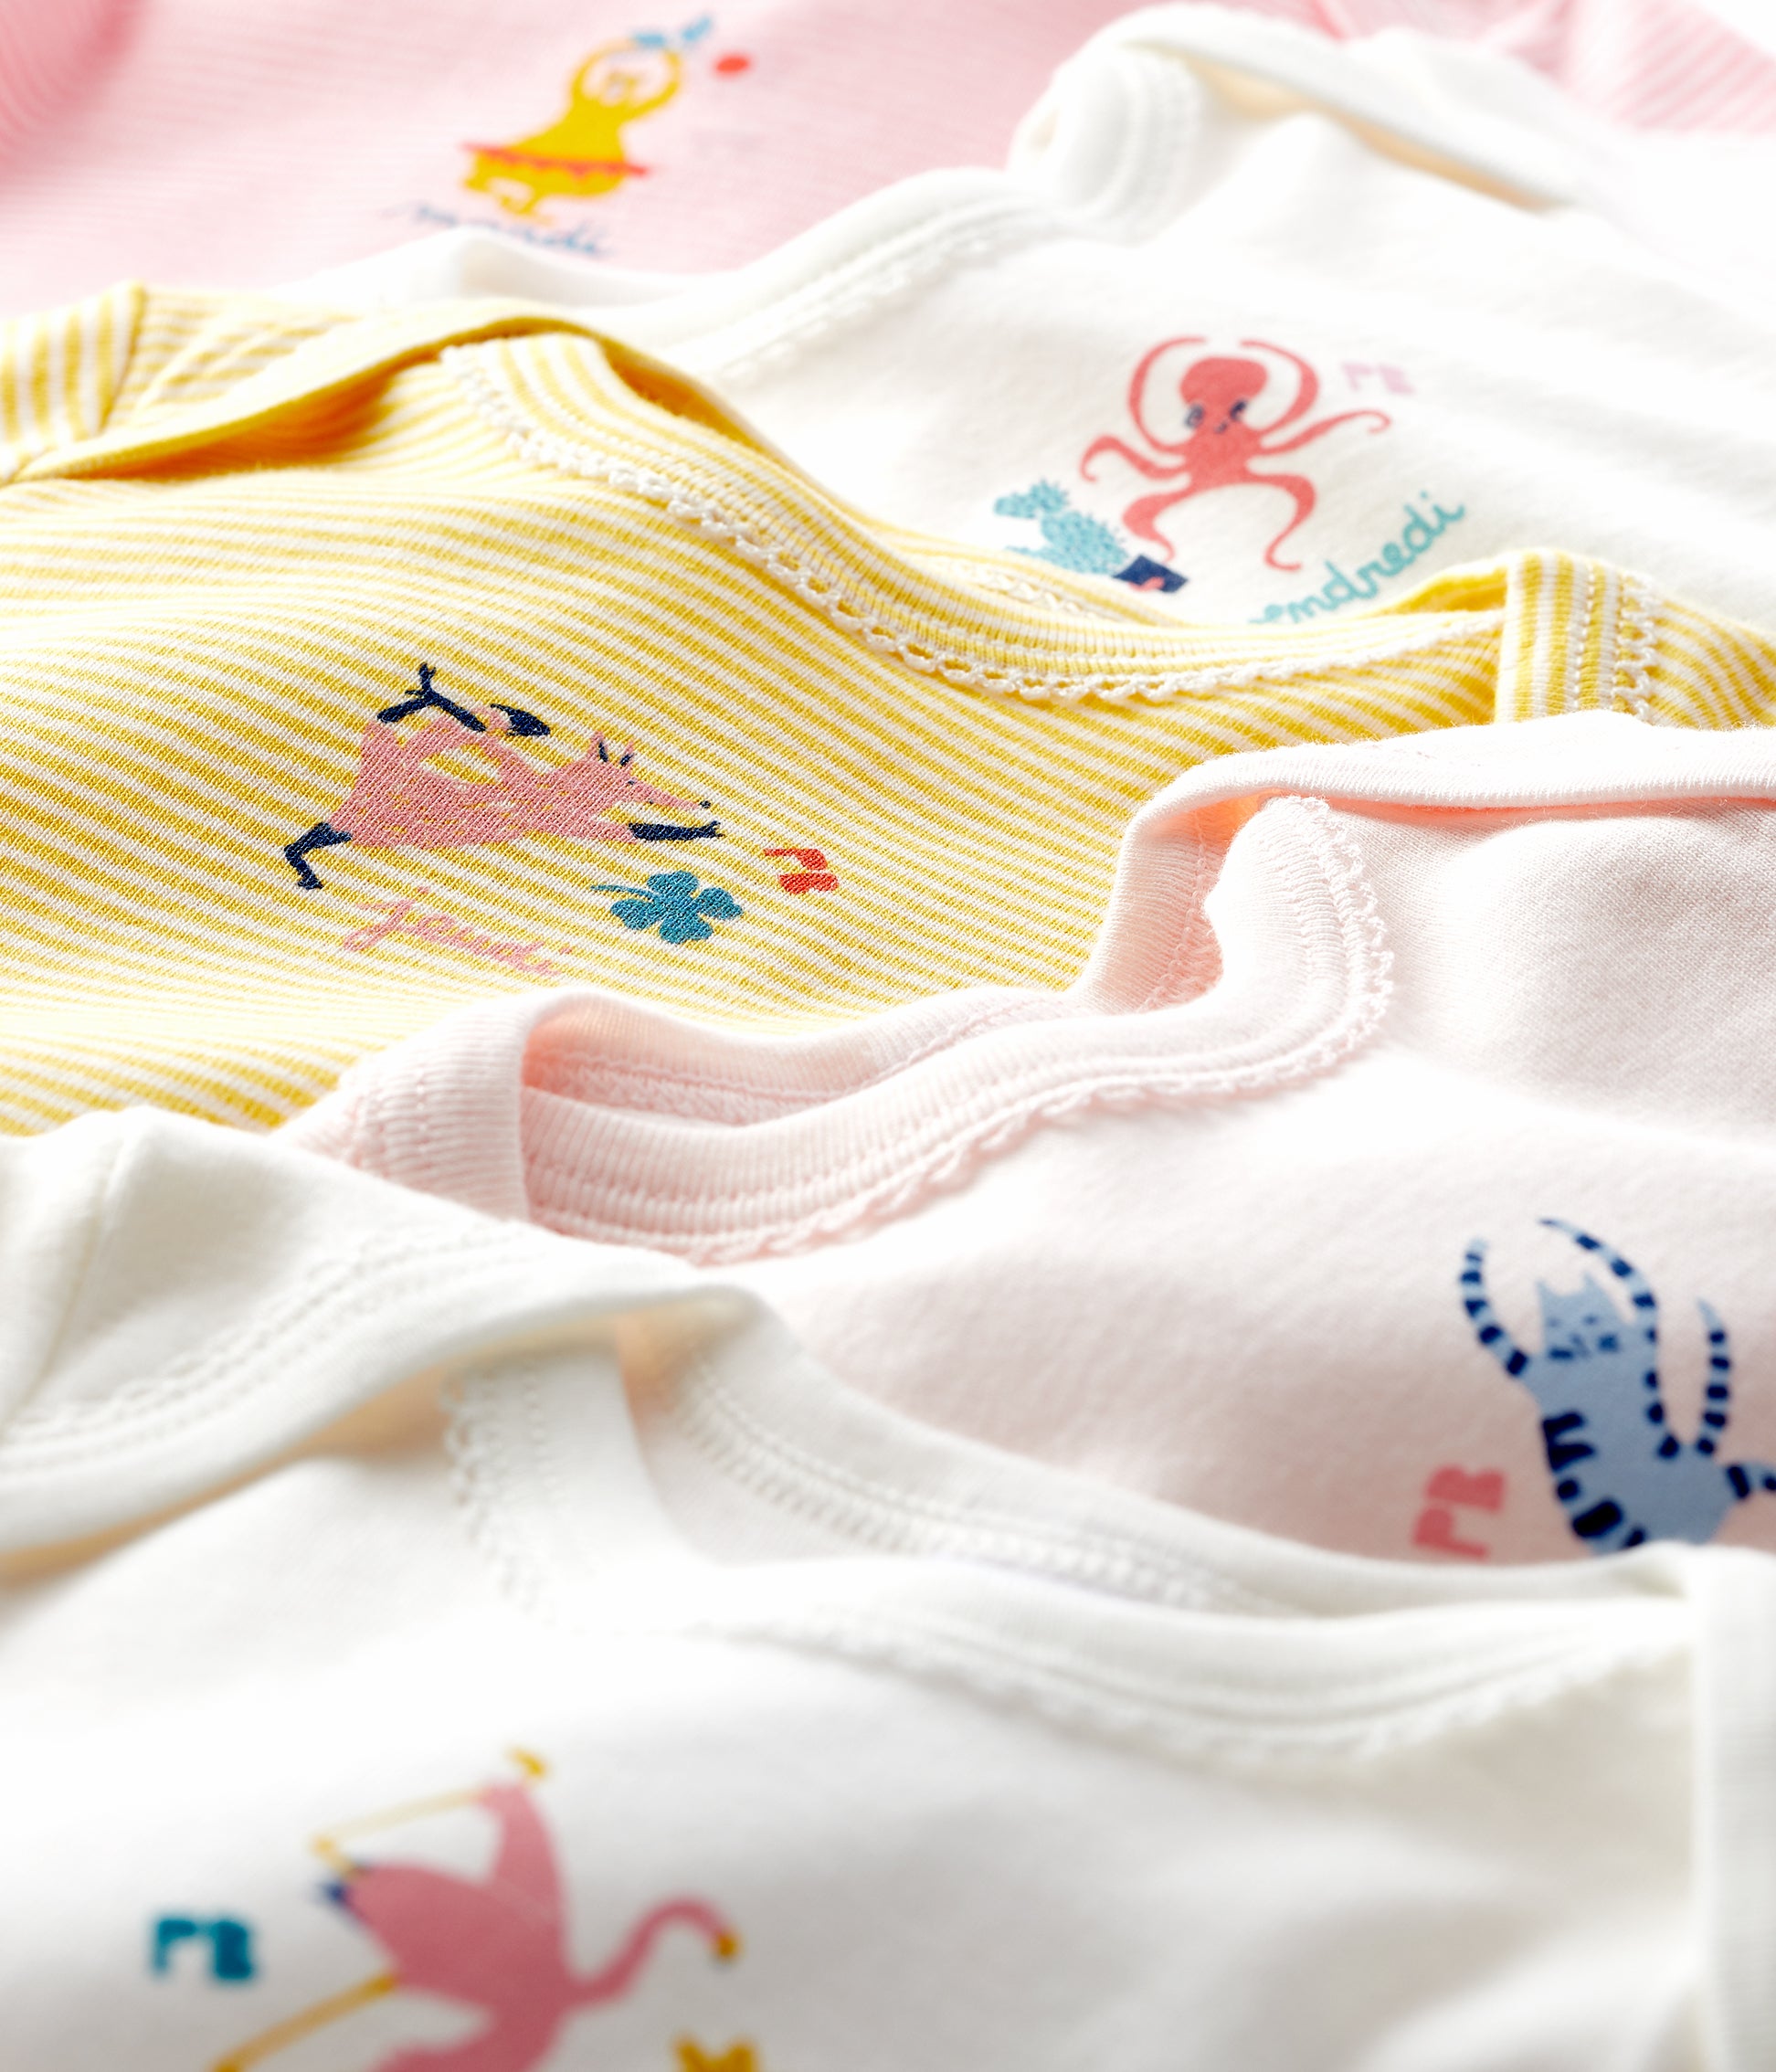 Baby Girls Multicolor Cotton Babysuits Sets (5 Pieces)